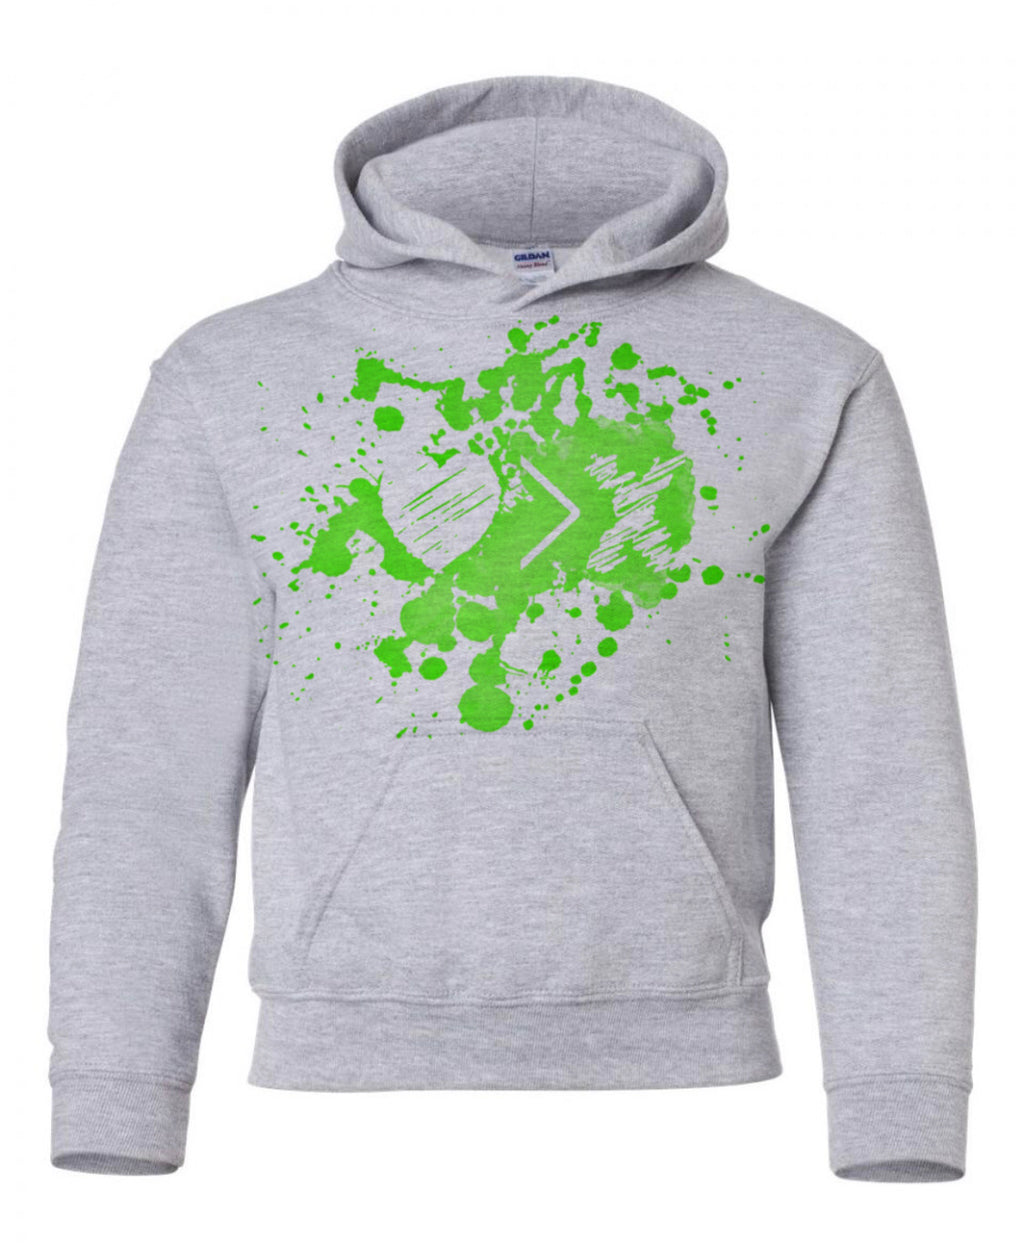 Grey/Green Paint Splash Logo hoodie (Toddler and Youth)